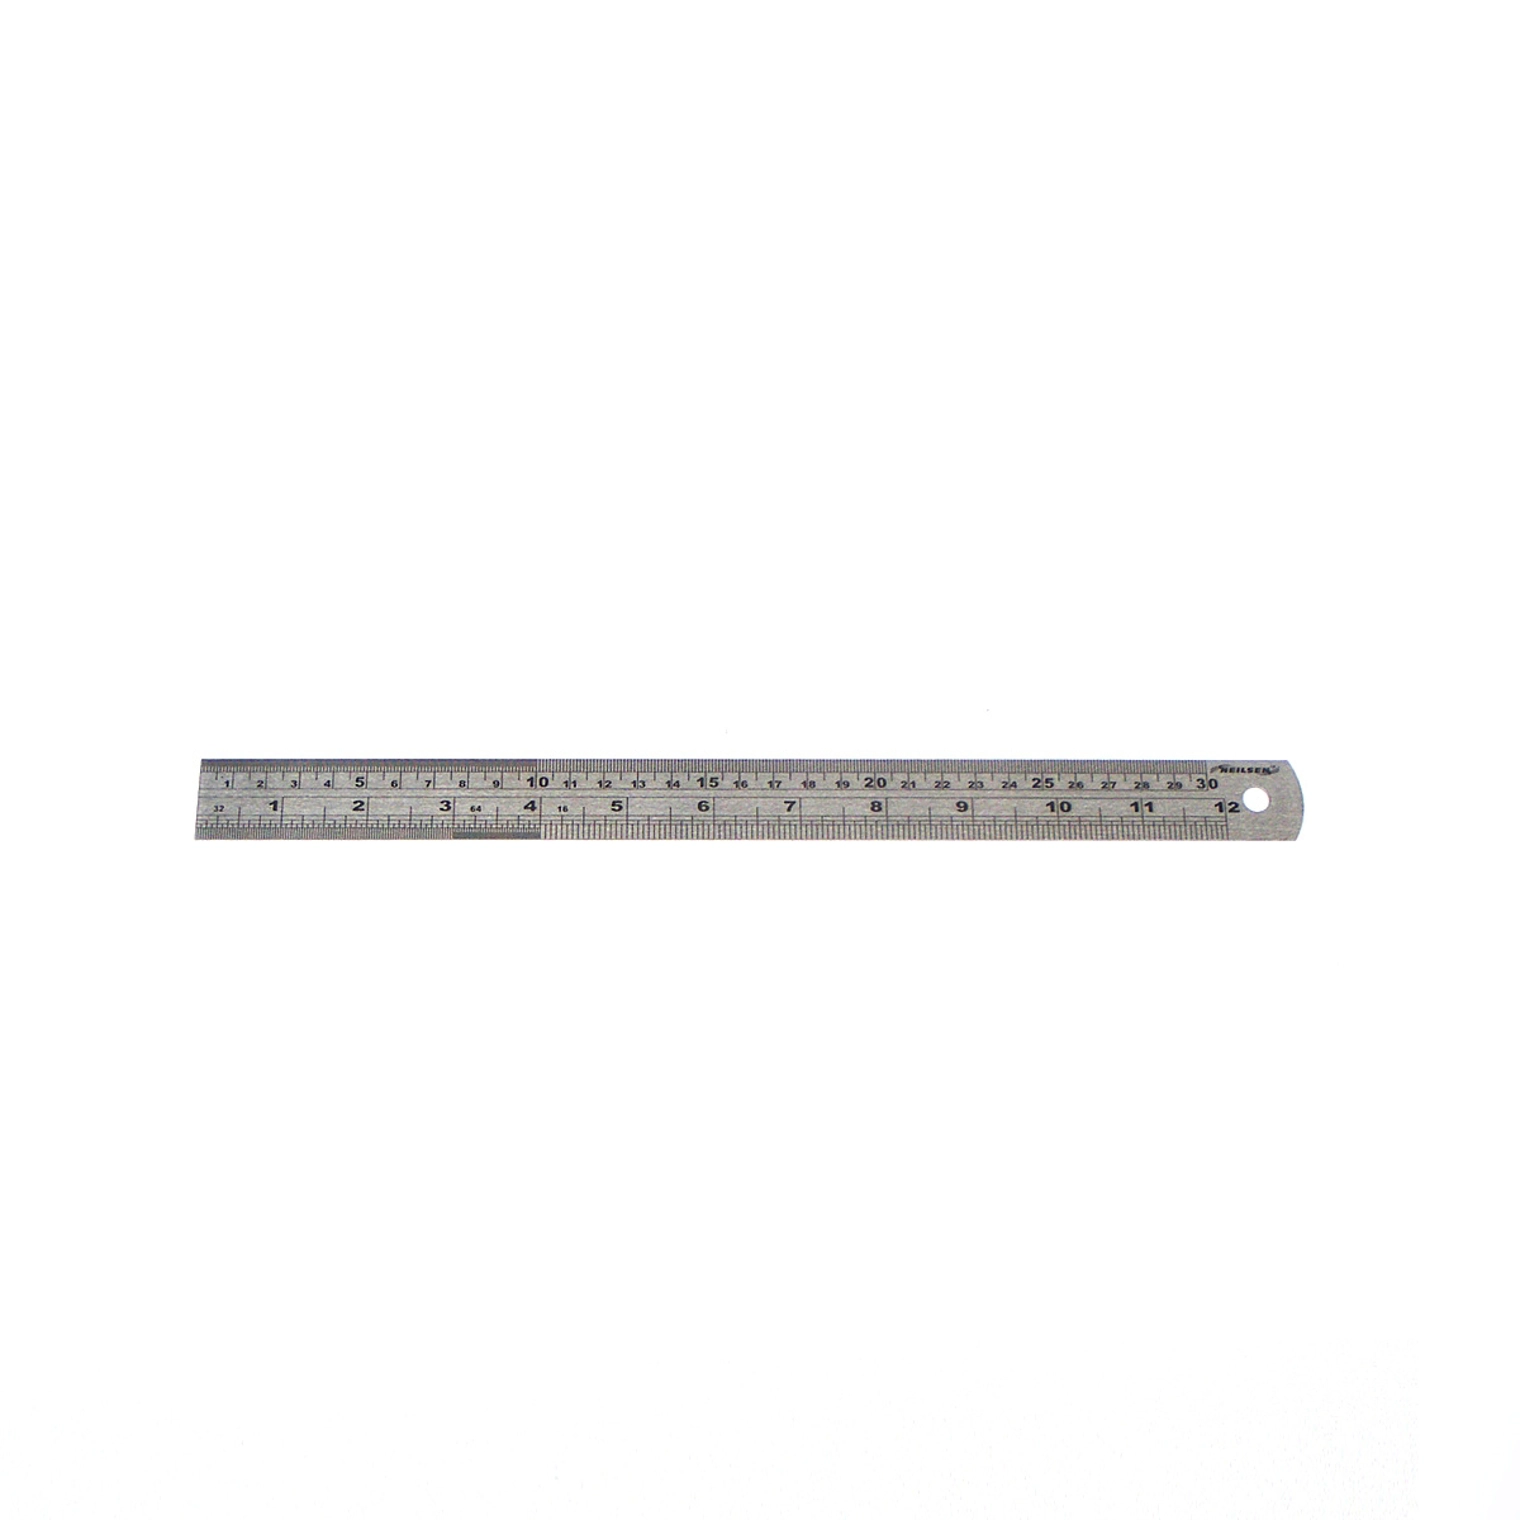 0001988_metric-imperial-ruler-stainless-steel-300mm